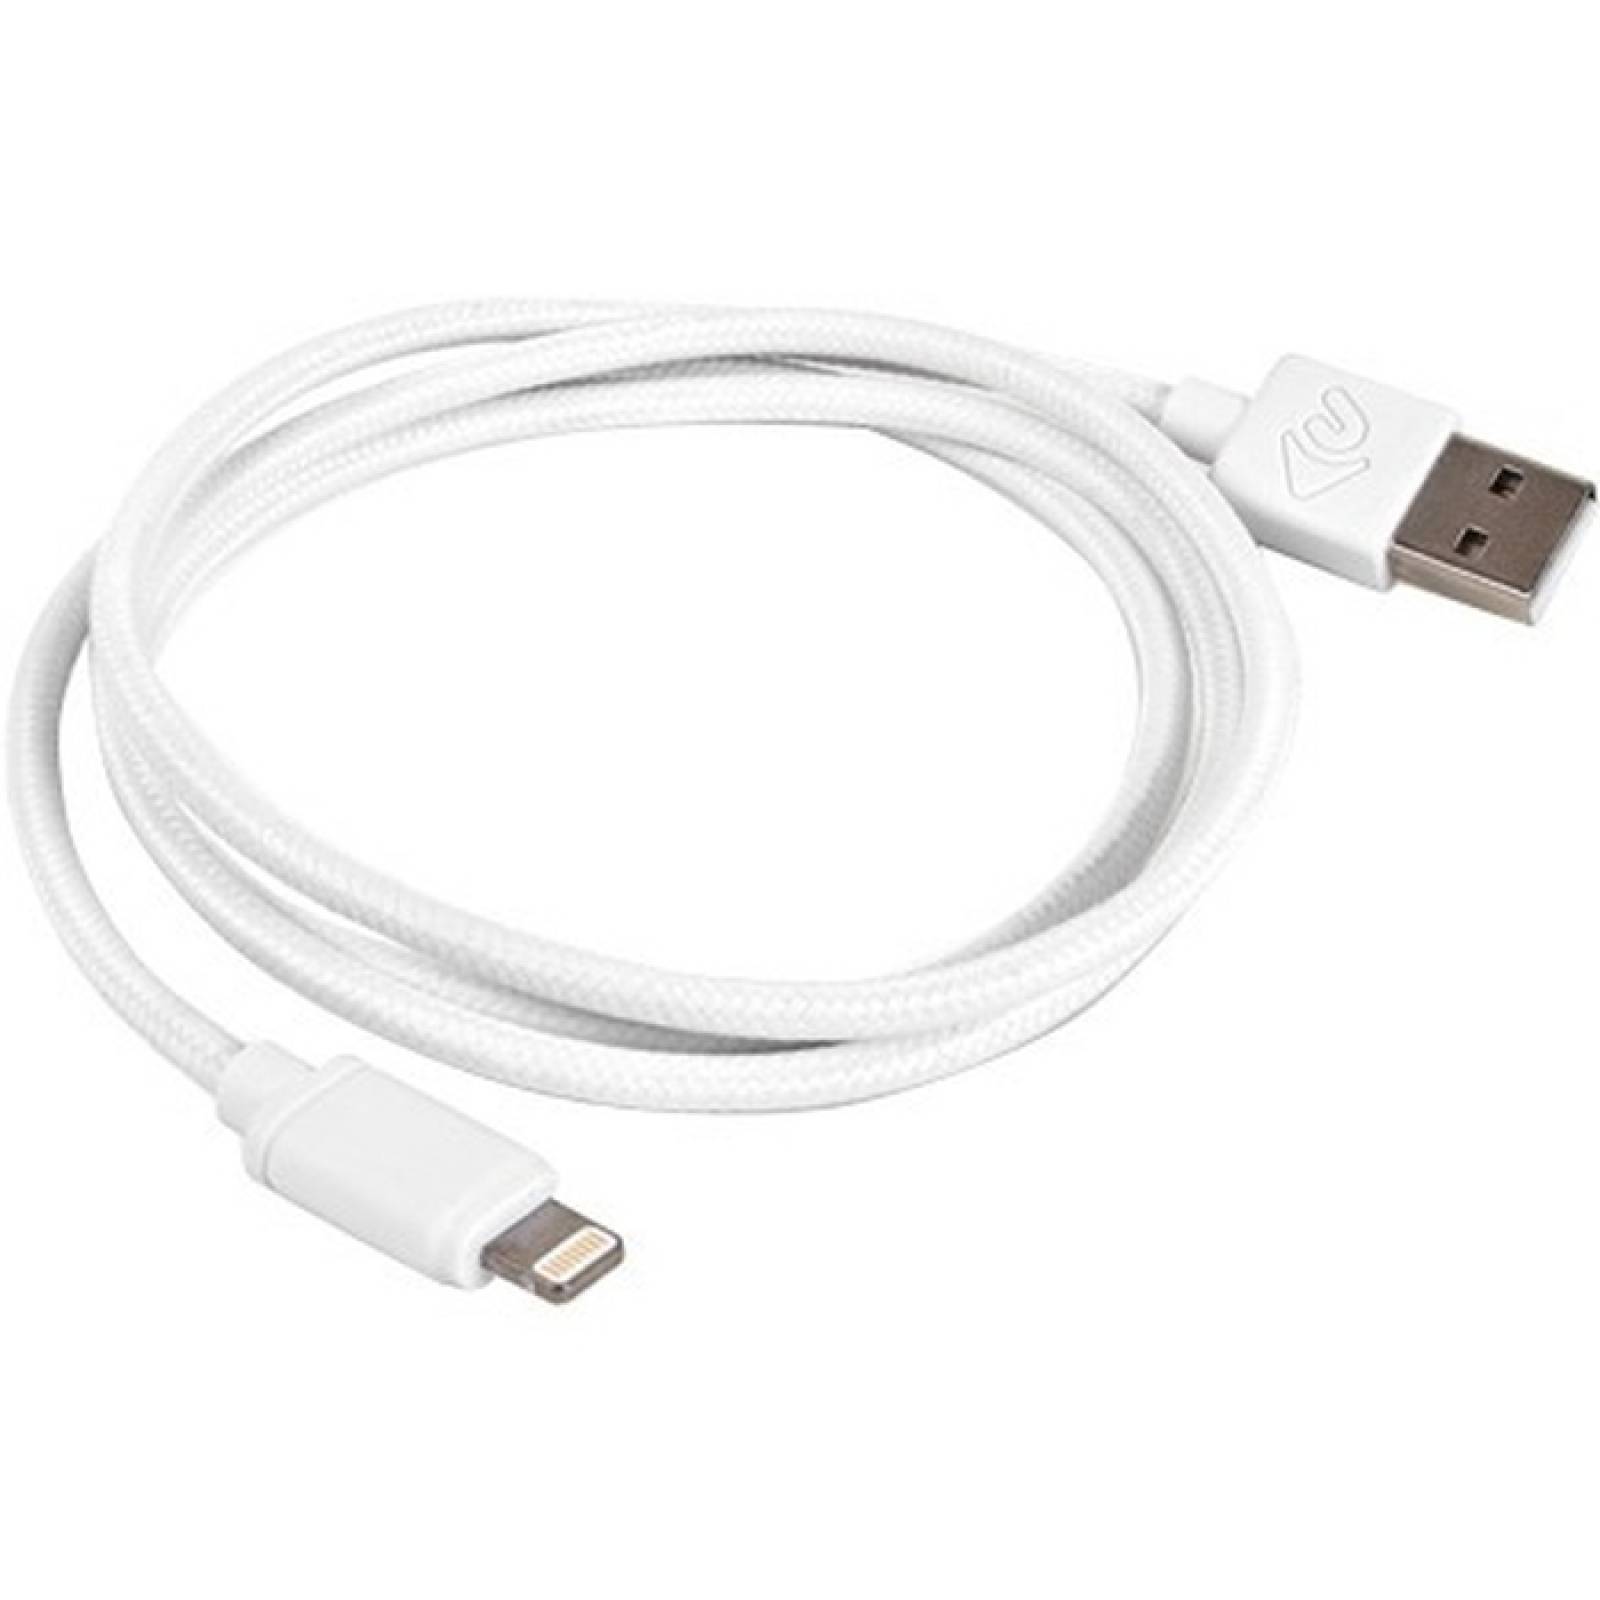 Cable de transferencia de datos OWC Premium Lightning  USB Charge  Sync